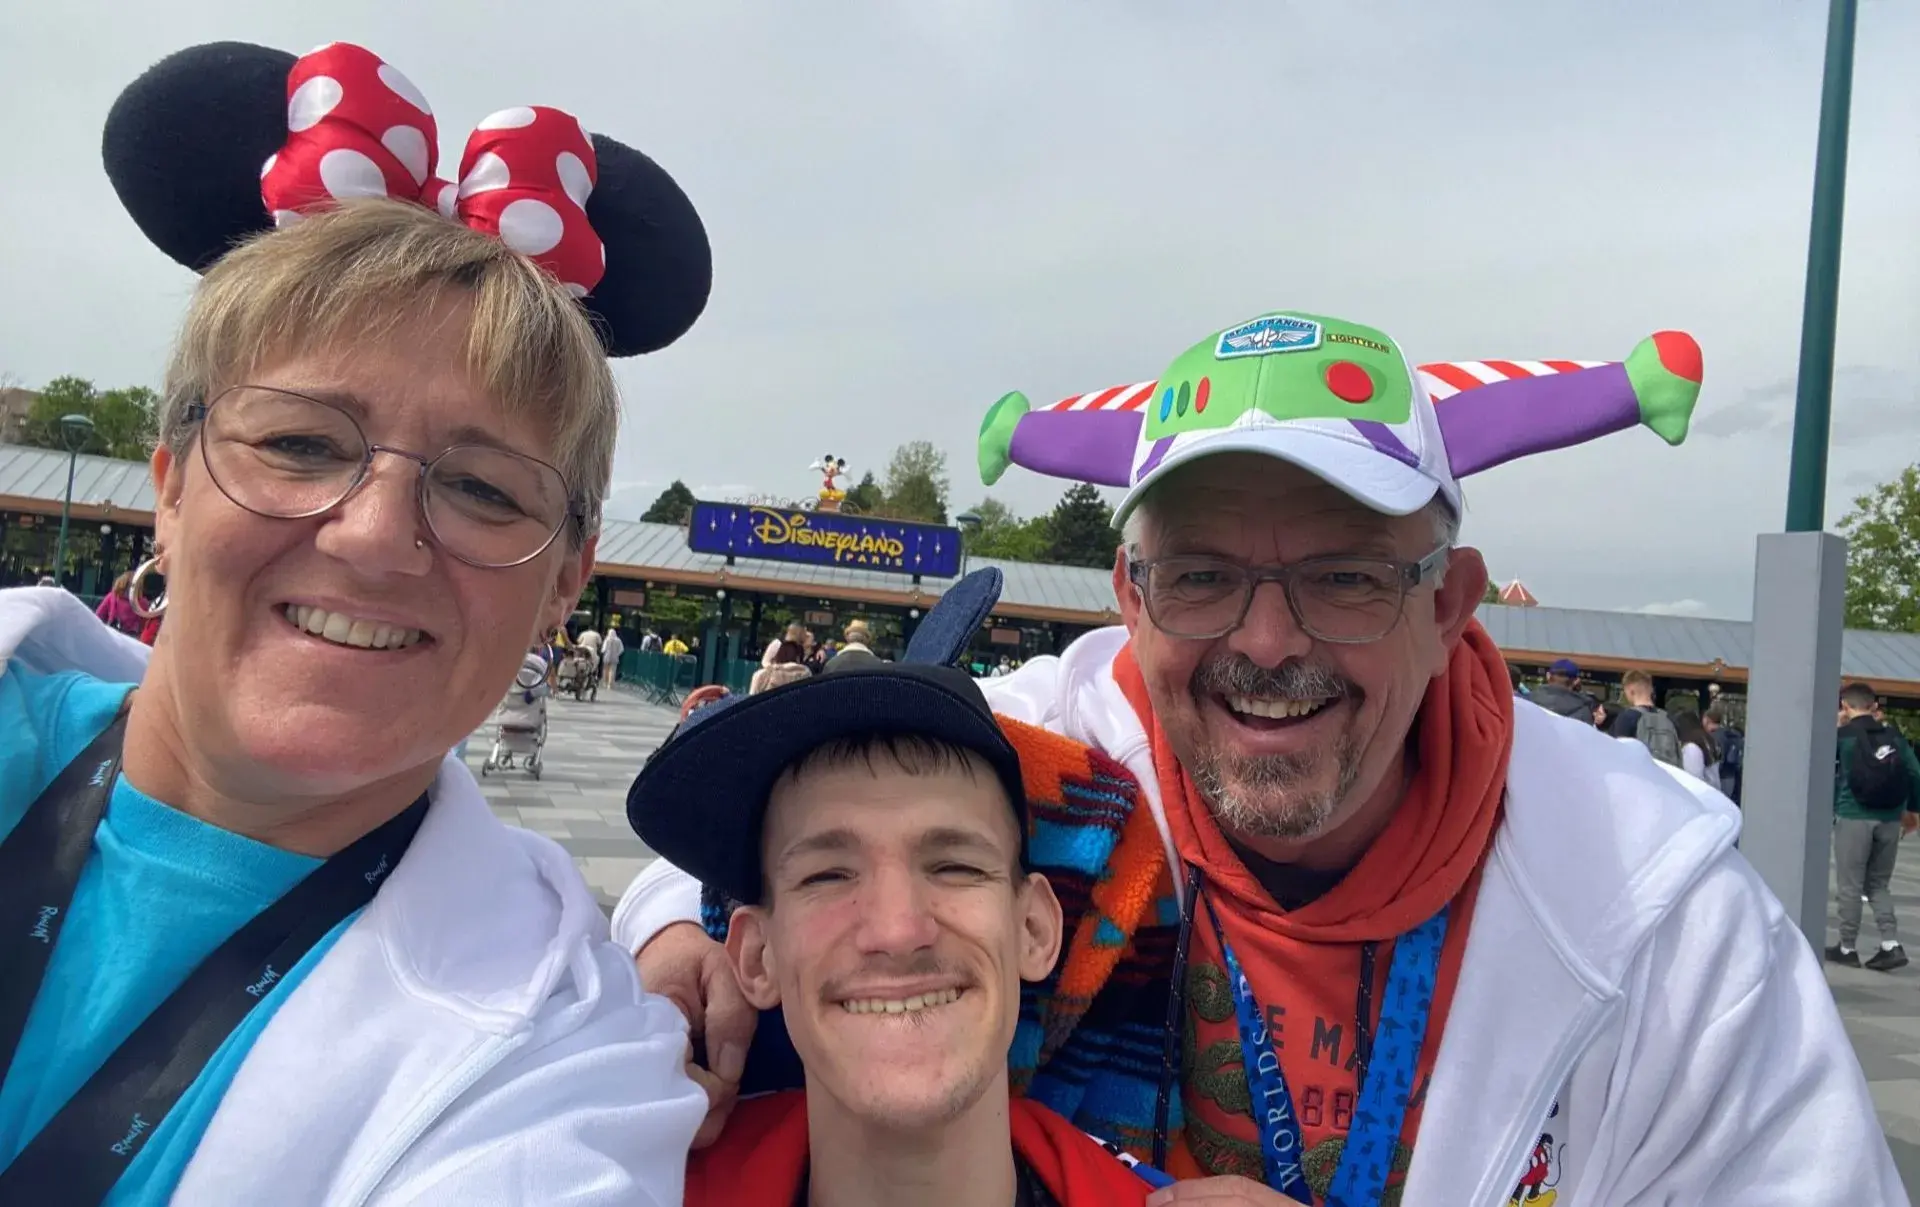 Charlie and his family at Disneyland Paris